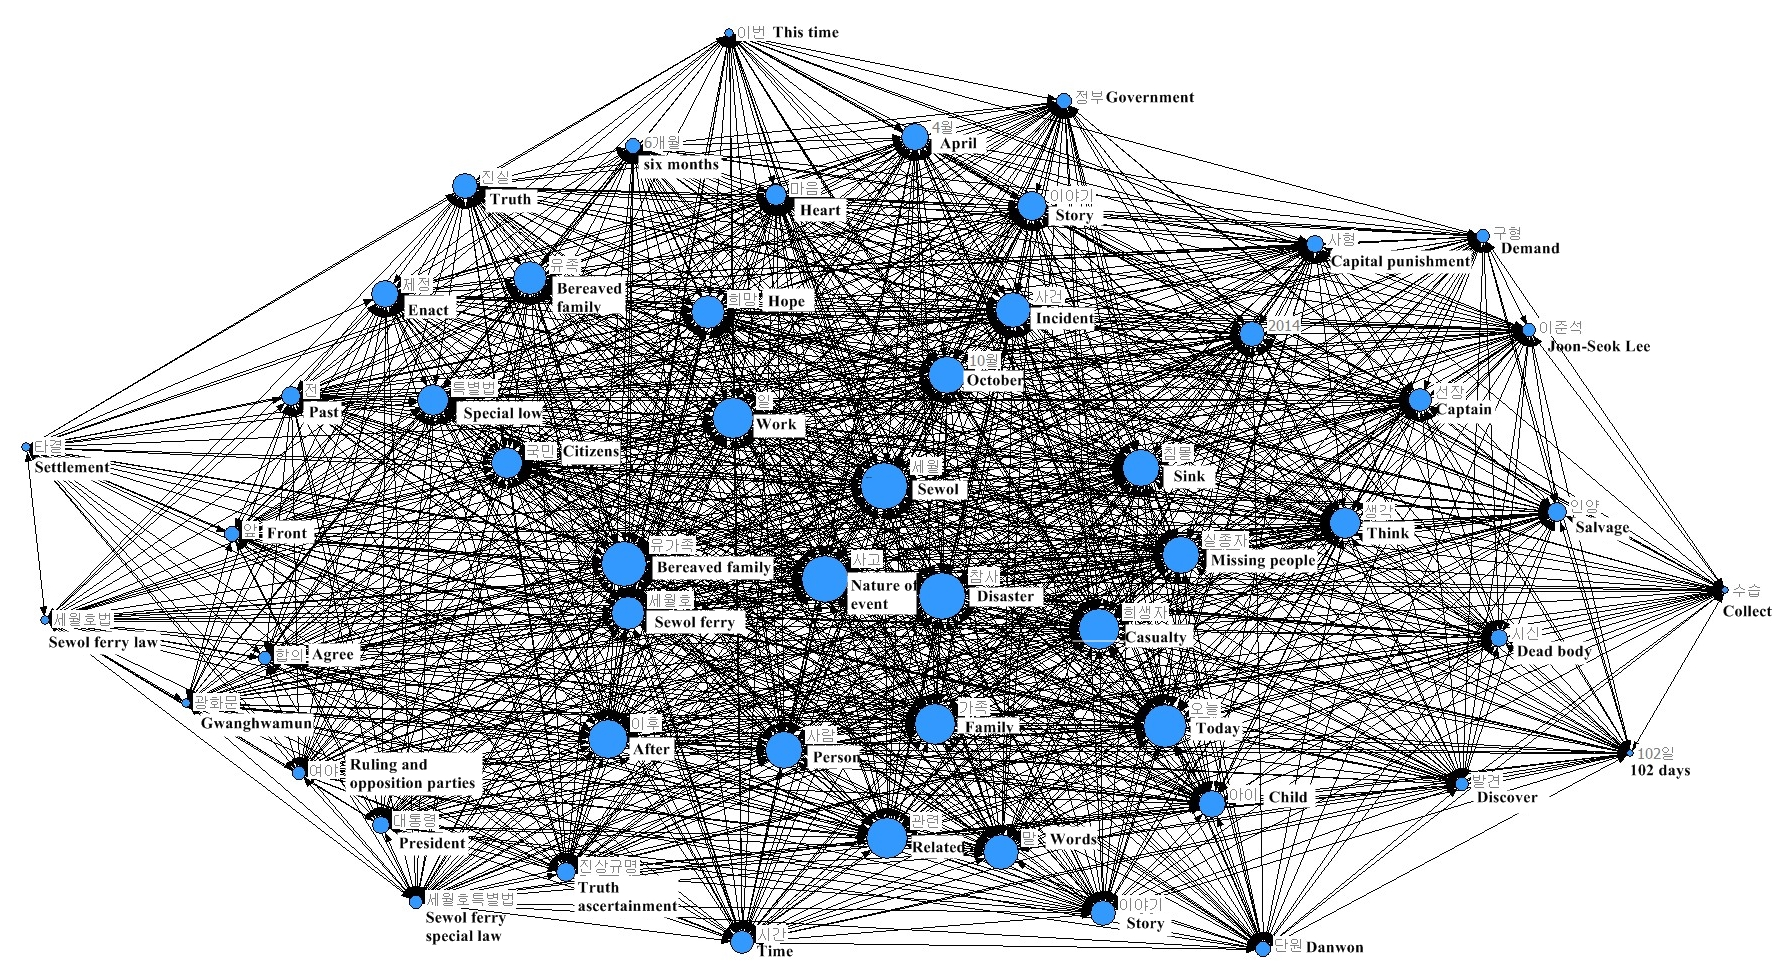 Figure 2: Semantic network analysis